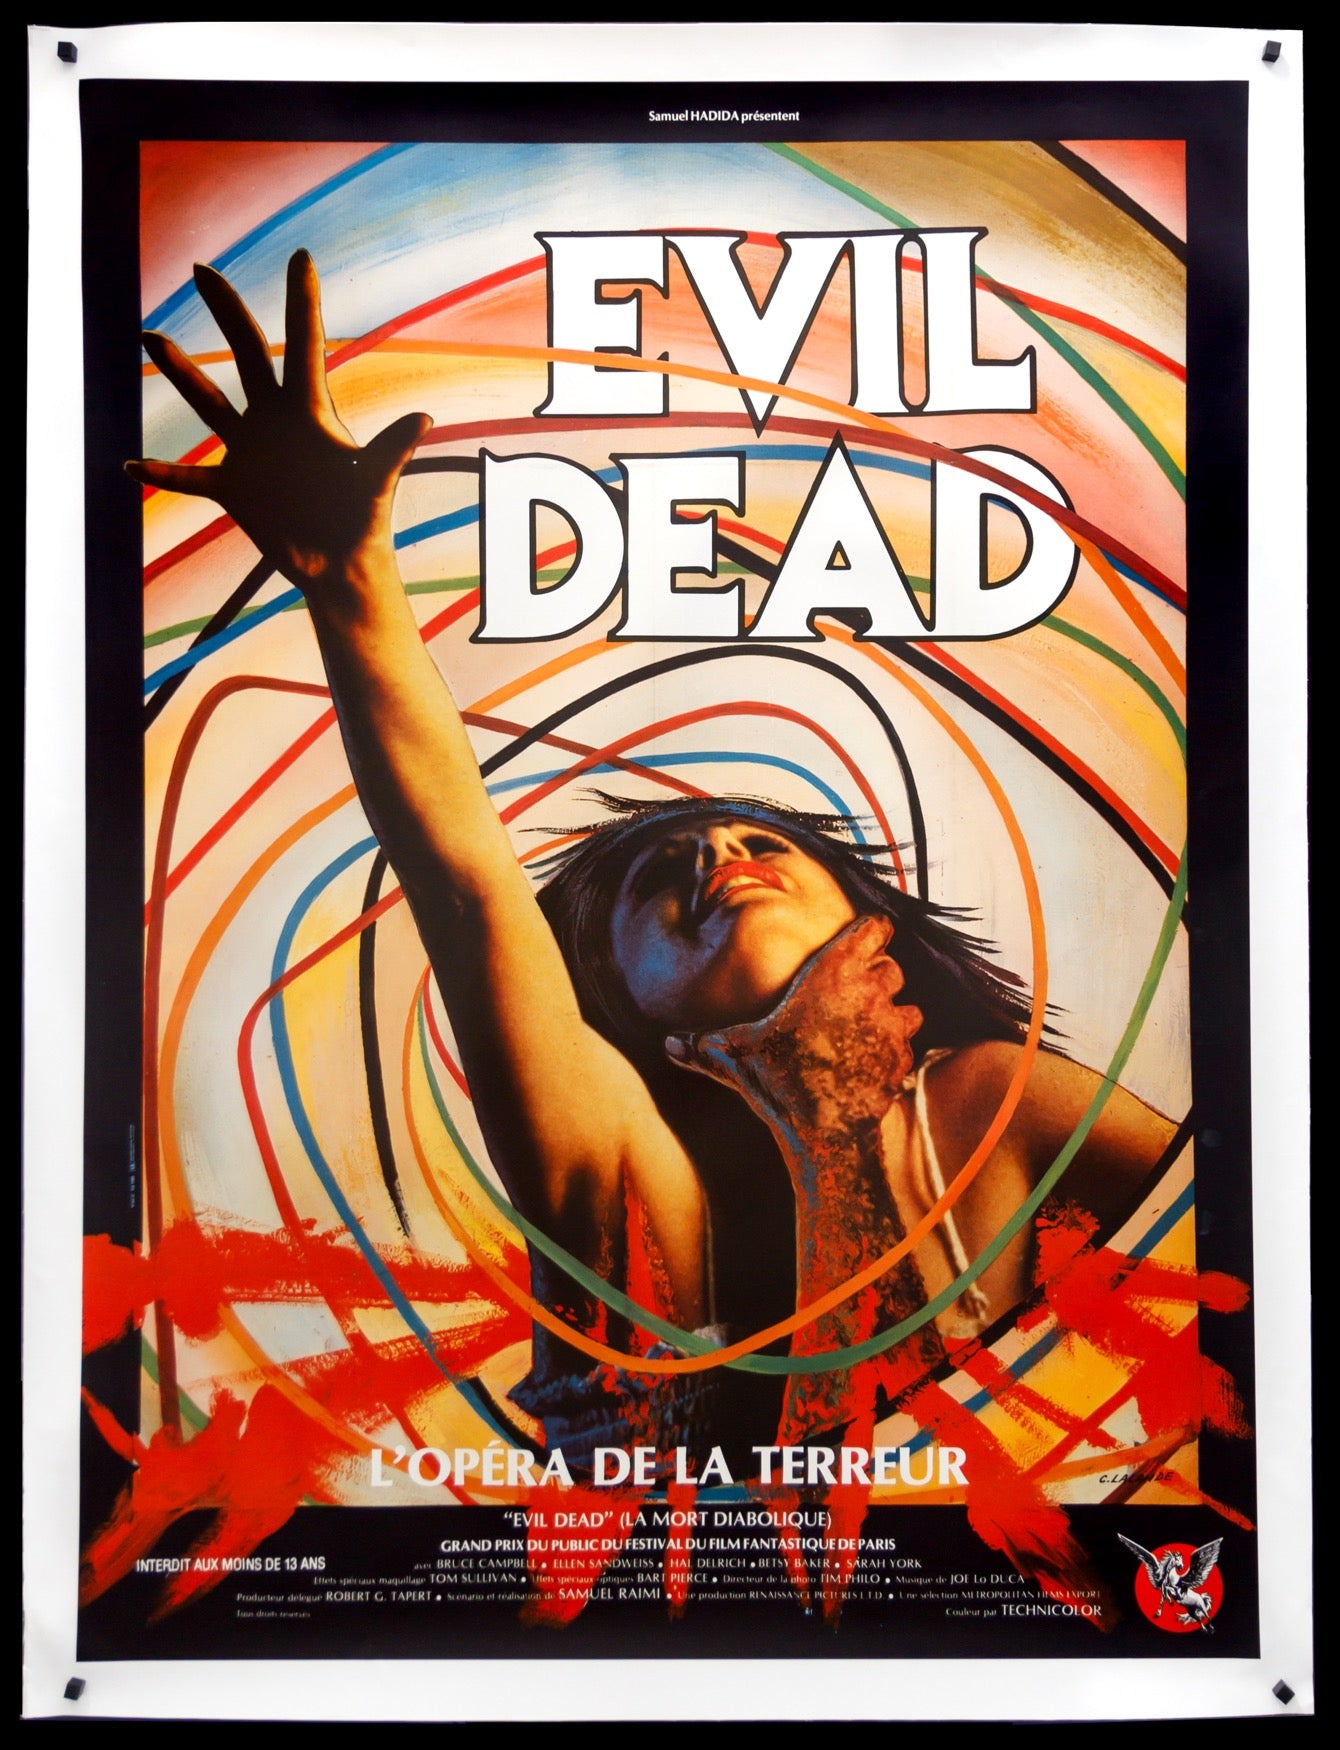 Evil Dead (1981) original movie poster for sale at Original Film Art